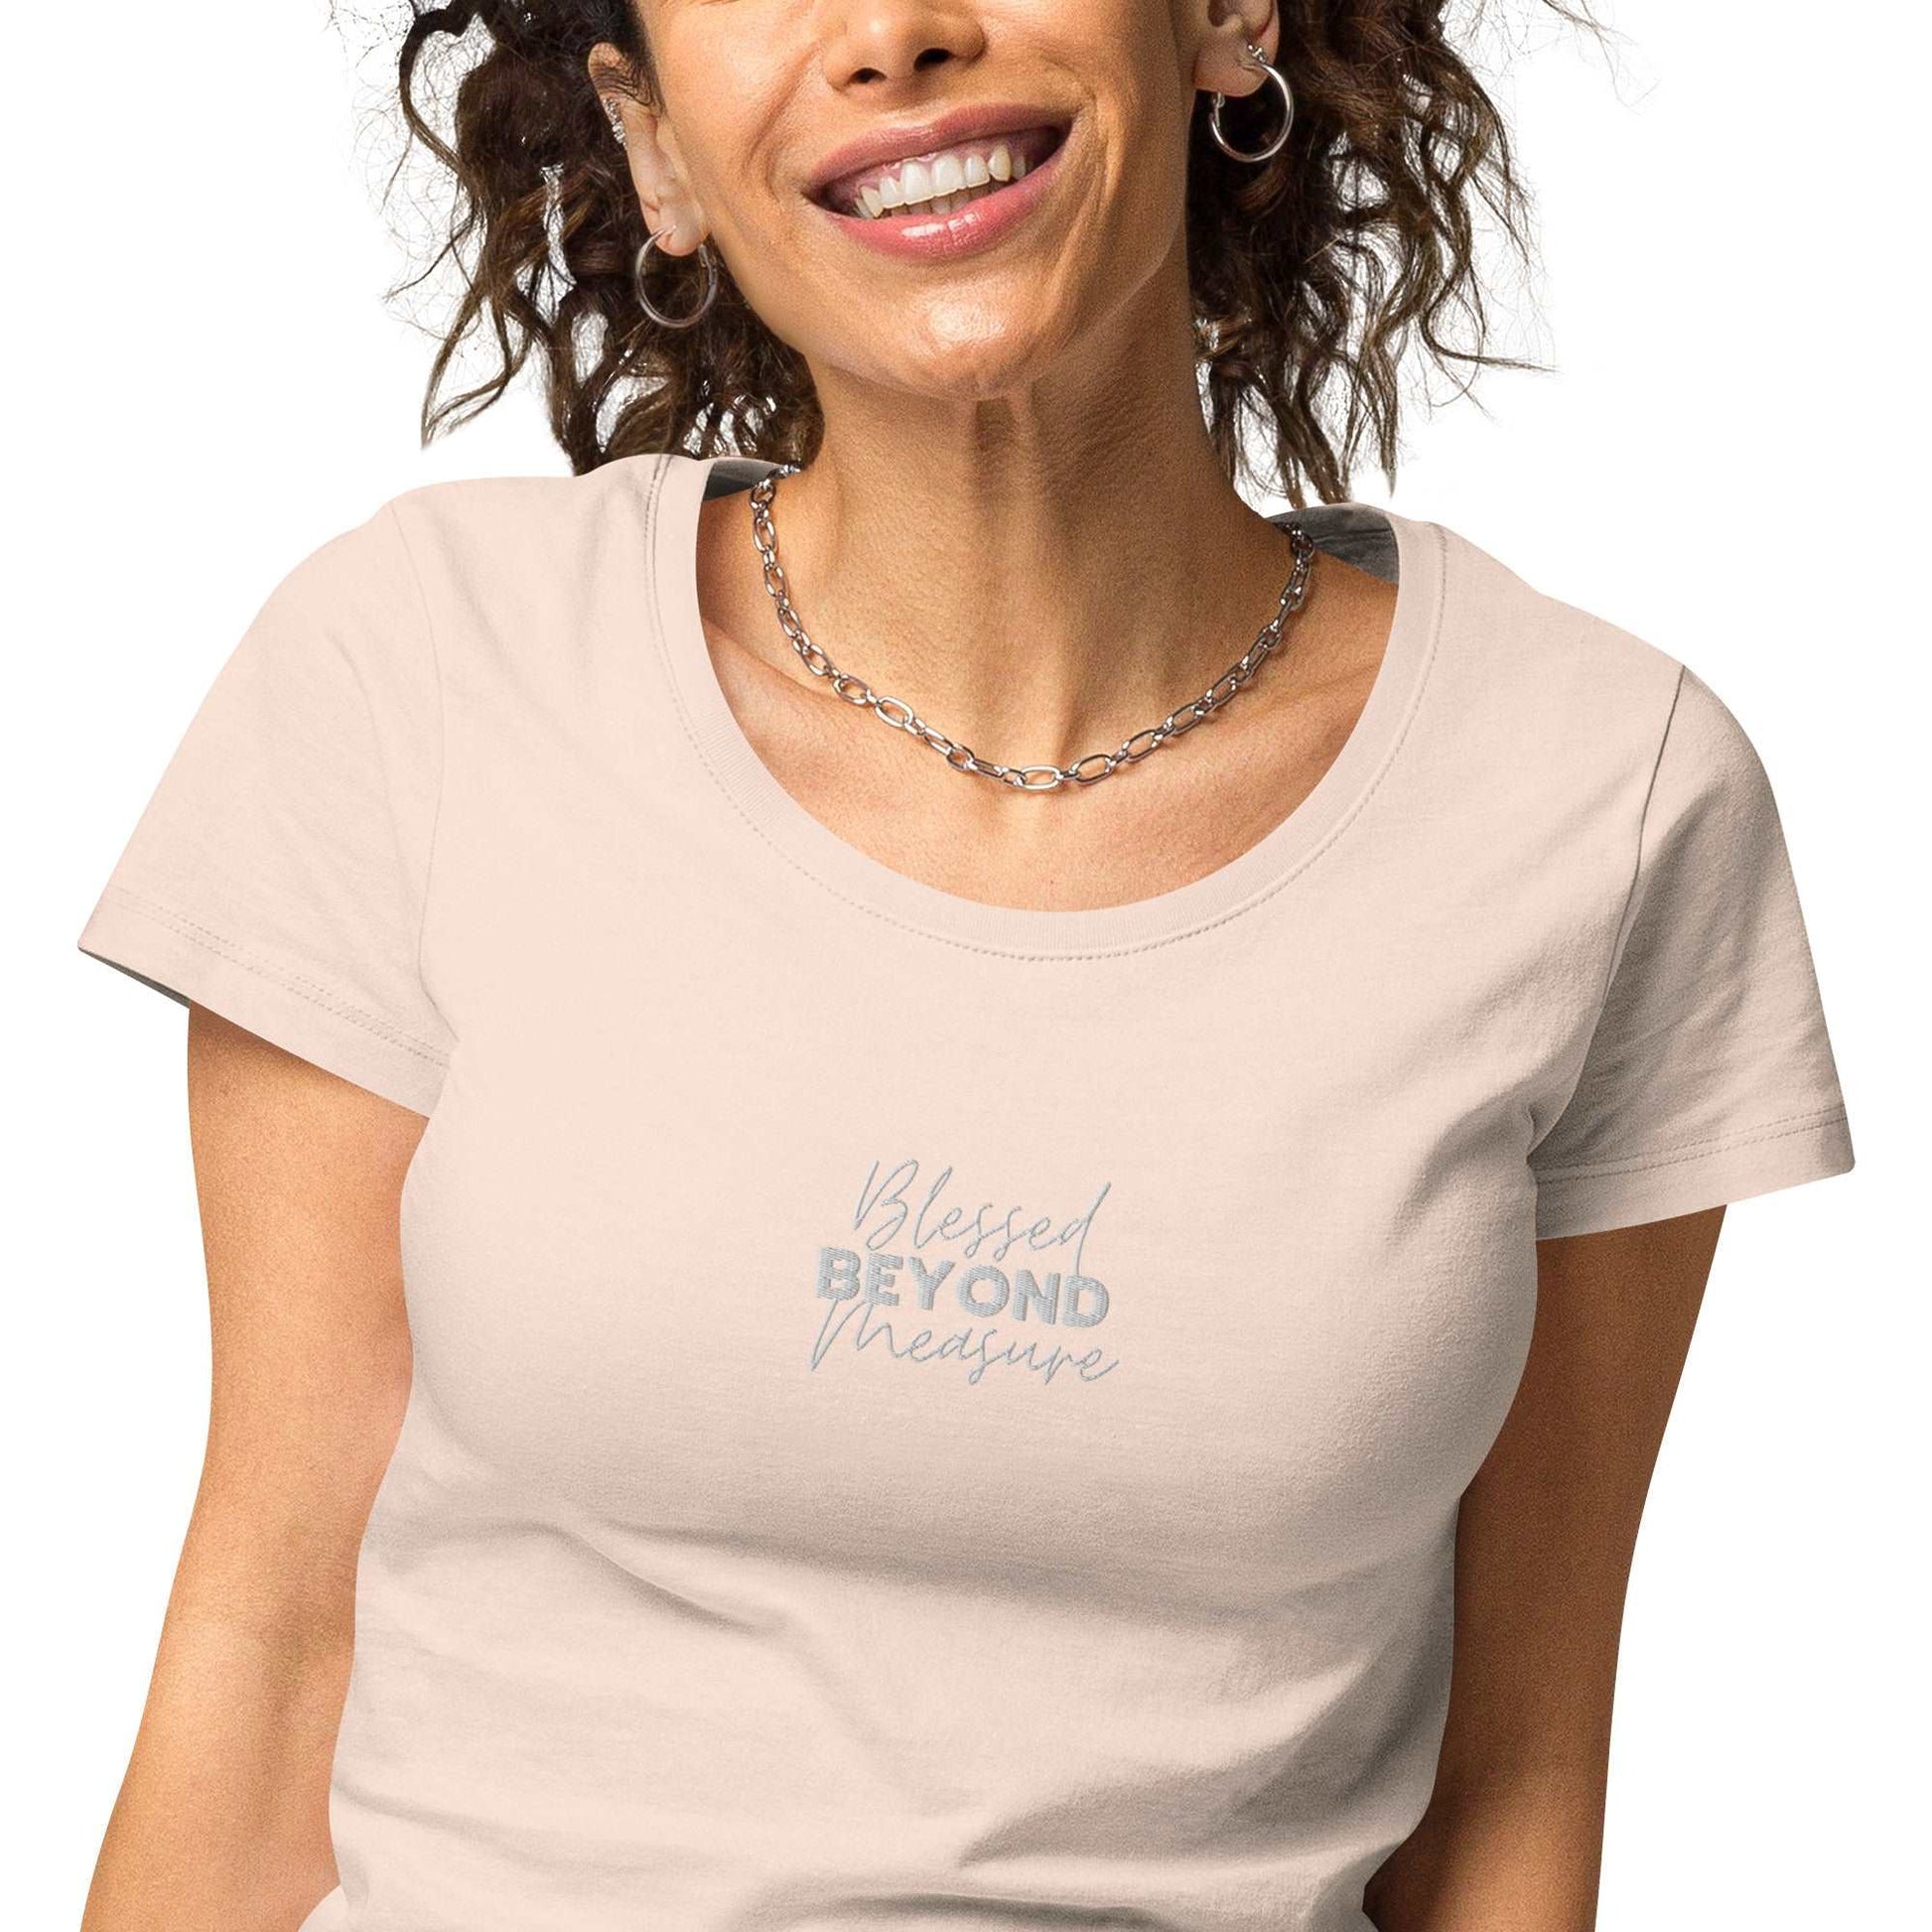 Blessed Beyond Measure - Women’s basic organic t-shirt